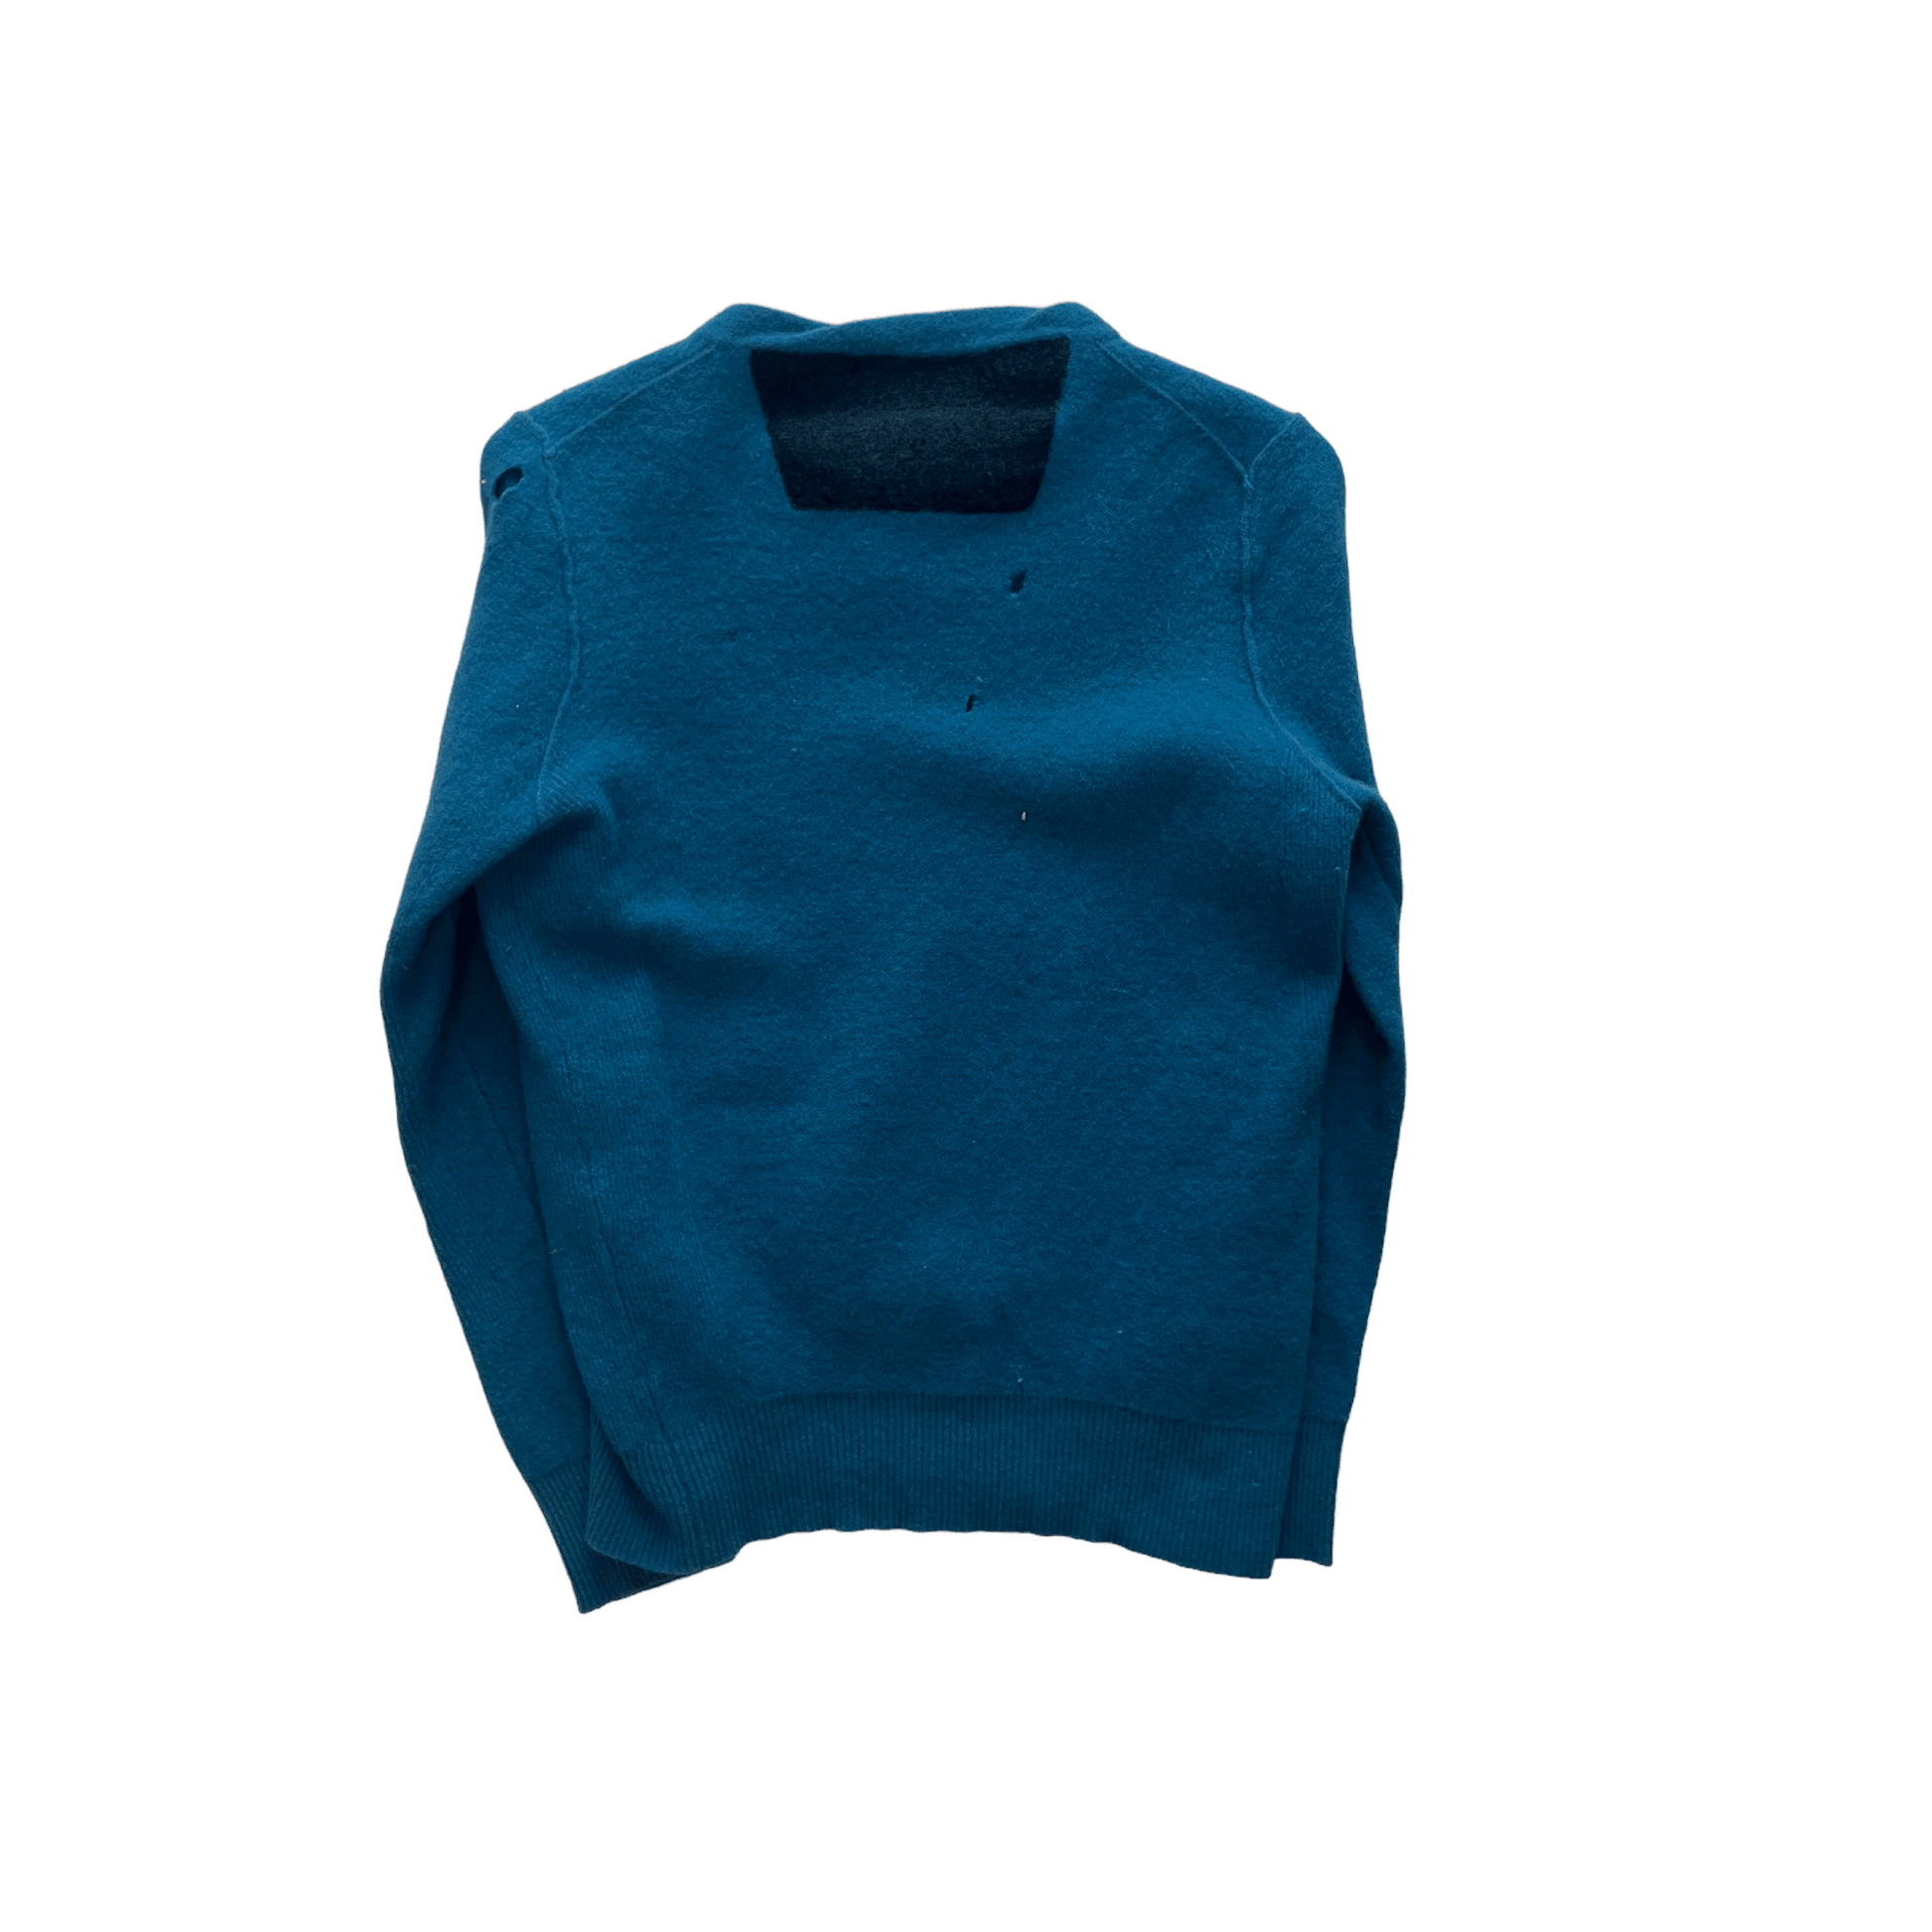 Vintage Blue Stone Island Sweatshirt - Small - The Streetwear Studio